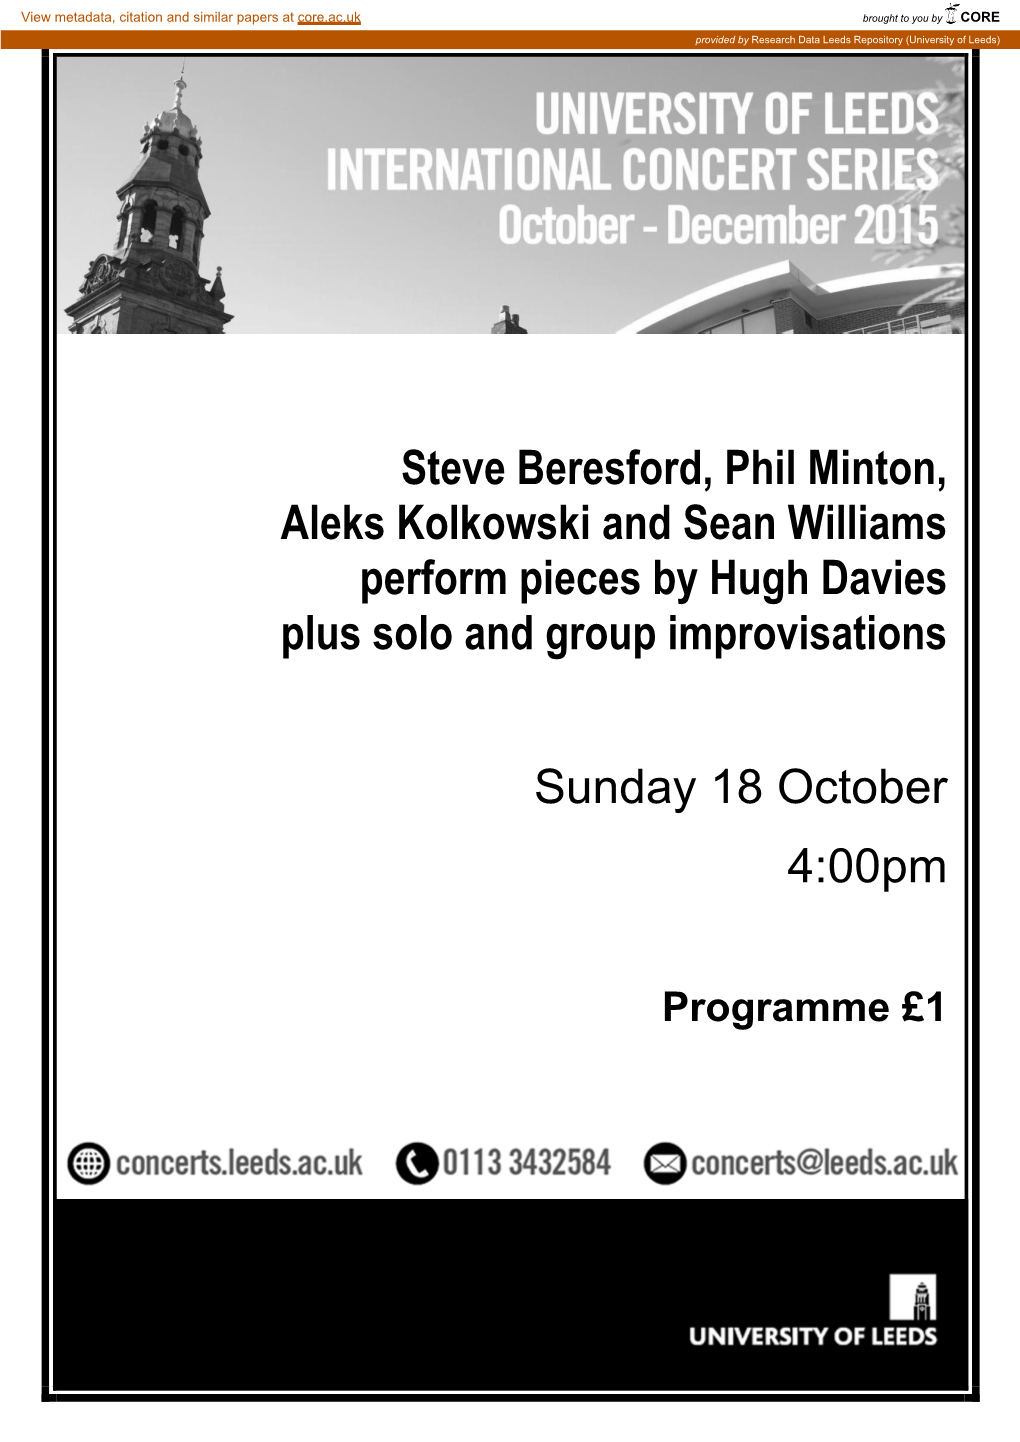 Steve Beresford, Phil Minton, Aleks Kolkowski and Sean Williams Perform Pieces by Hugh Davies